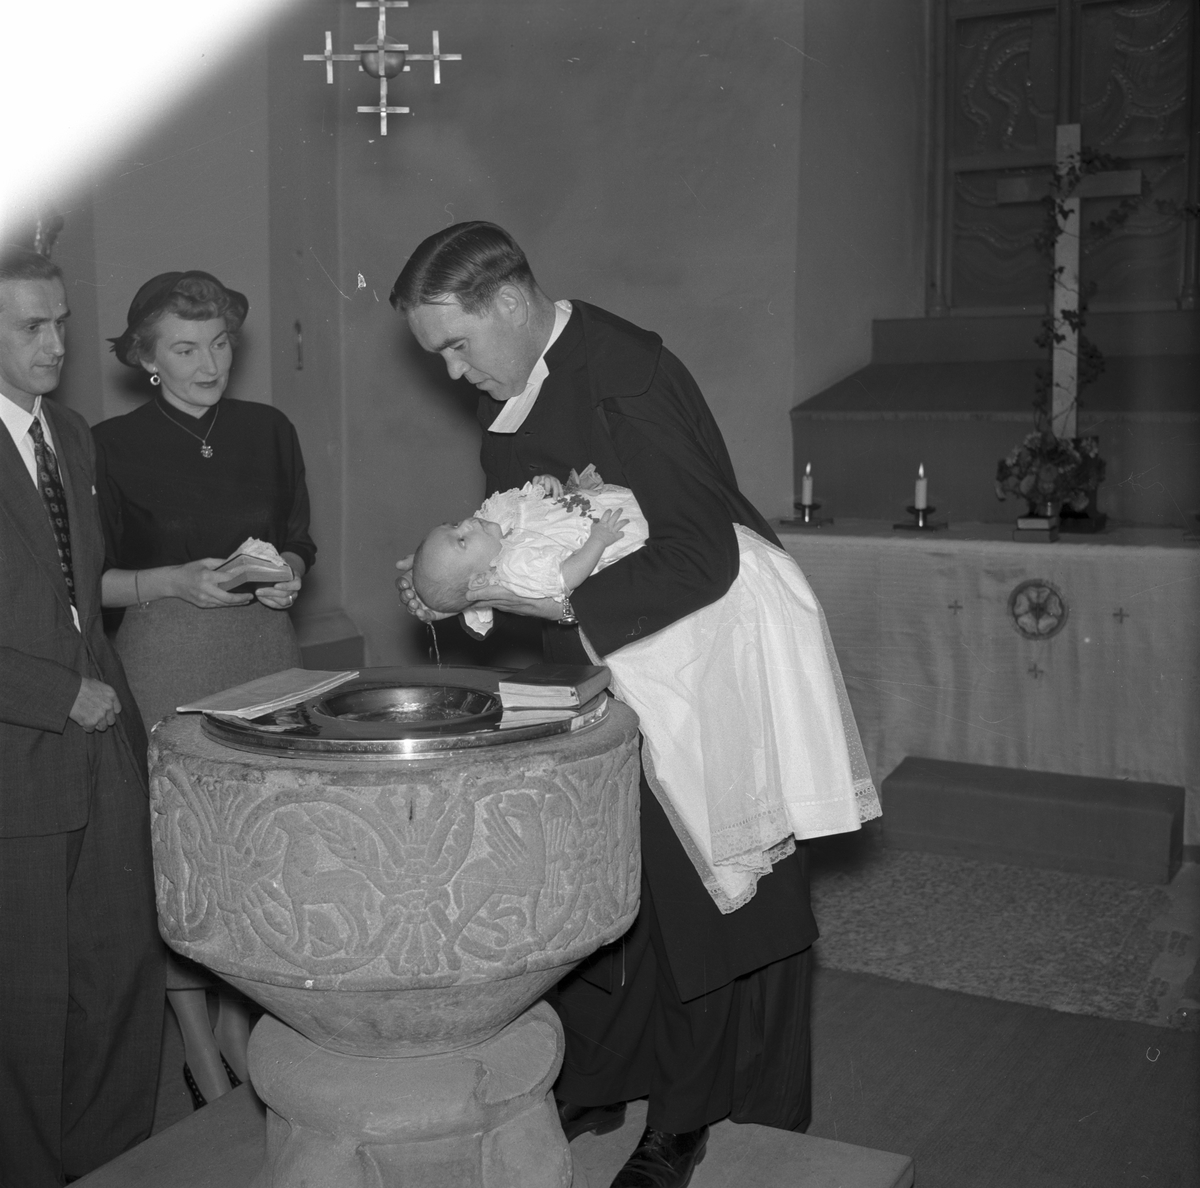 Barndop i Heliga Trefaldighets Kyrka, Gävle. 1955.
Gustaf Lindblom, Sofiagatan 1, Gävle